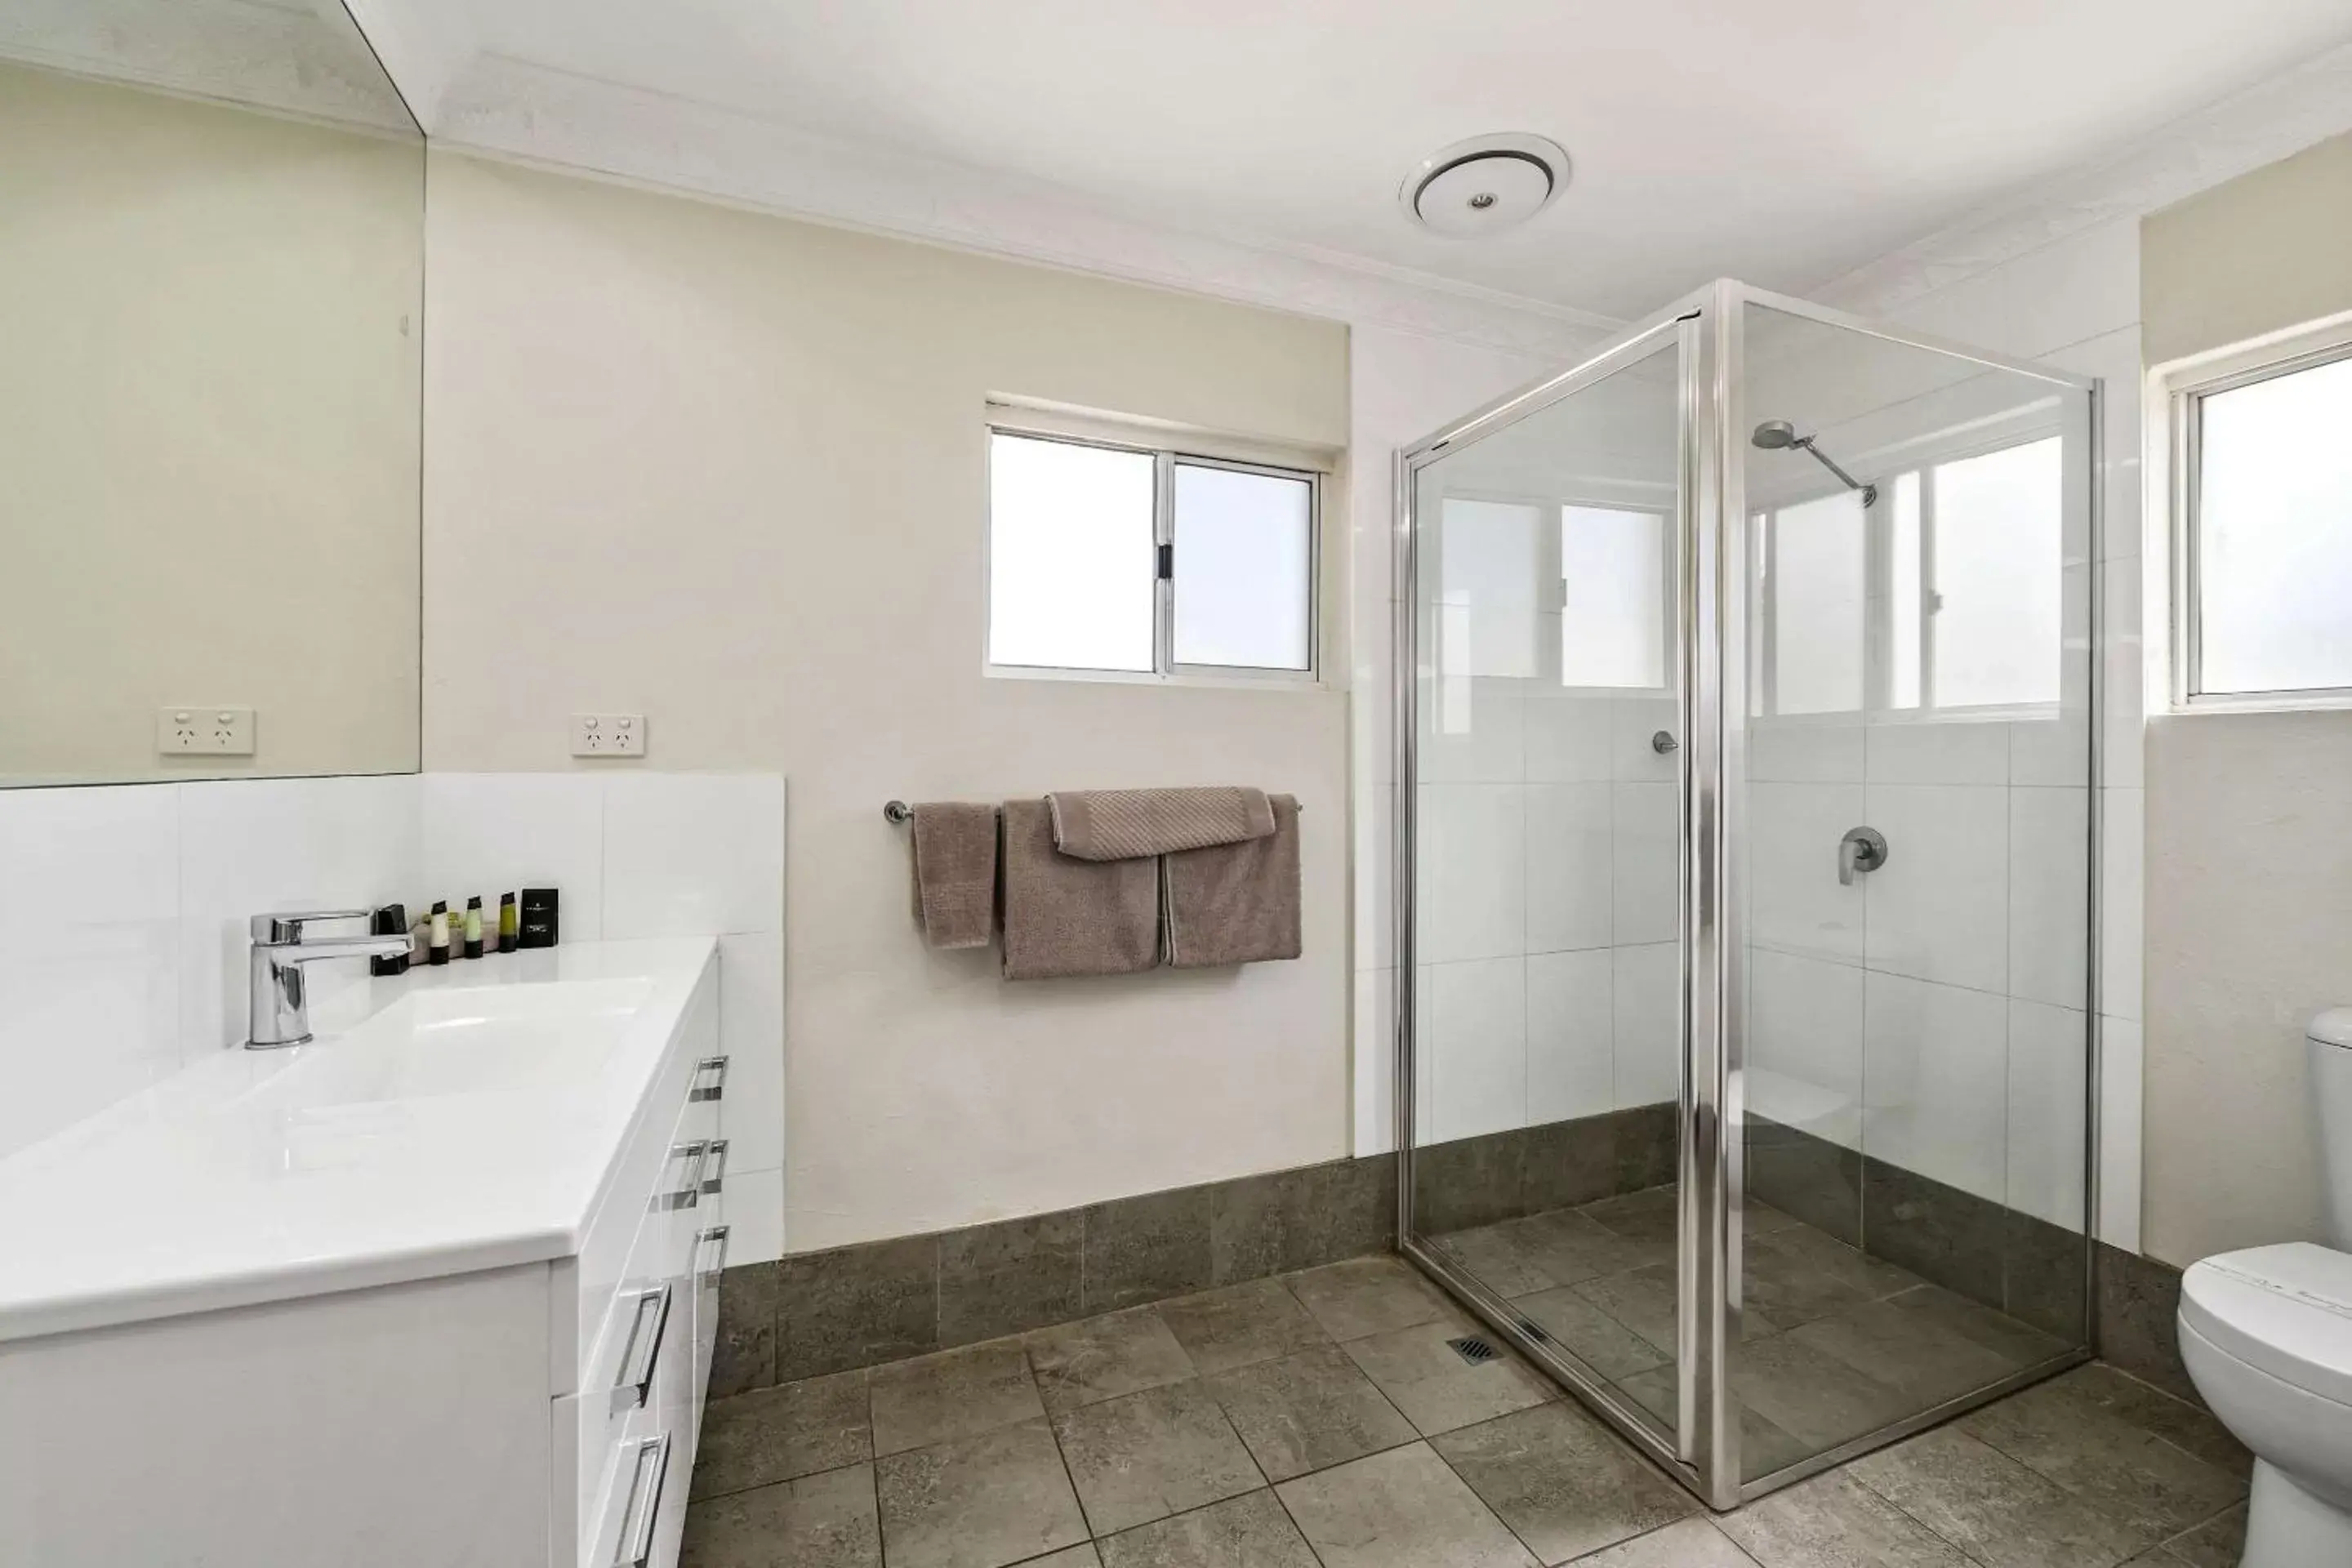 Photo of the whole room, Bathroom in Quality Inn Ashby House Tamworth